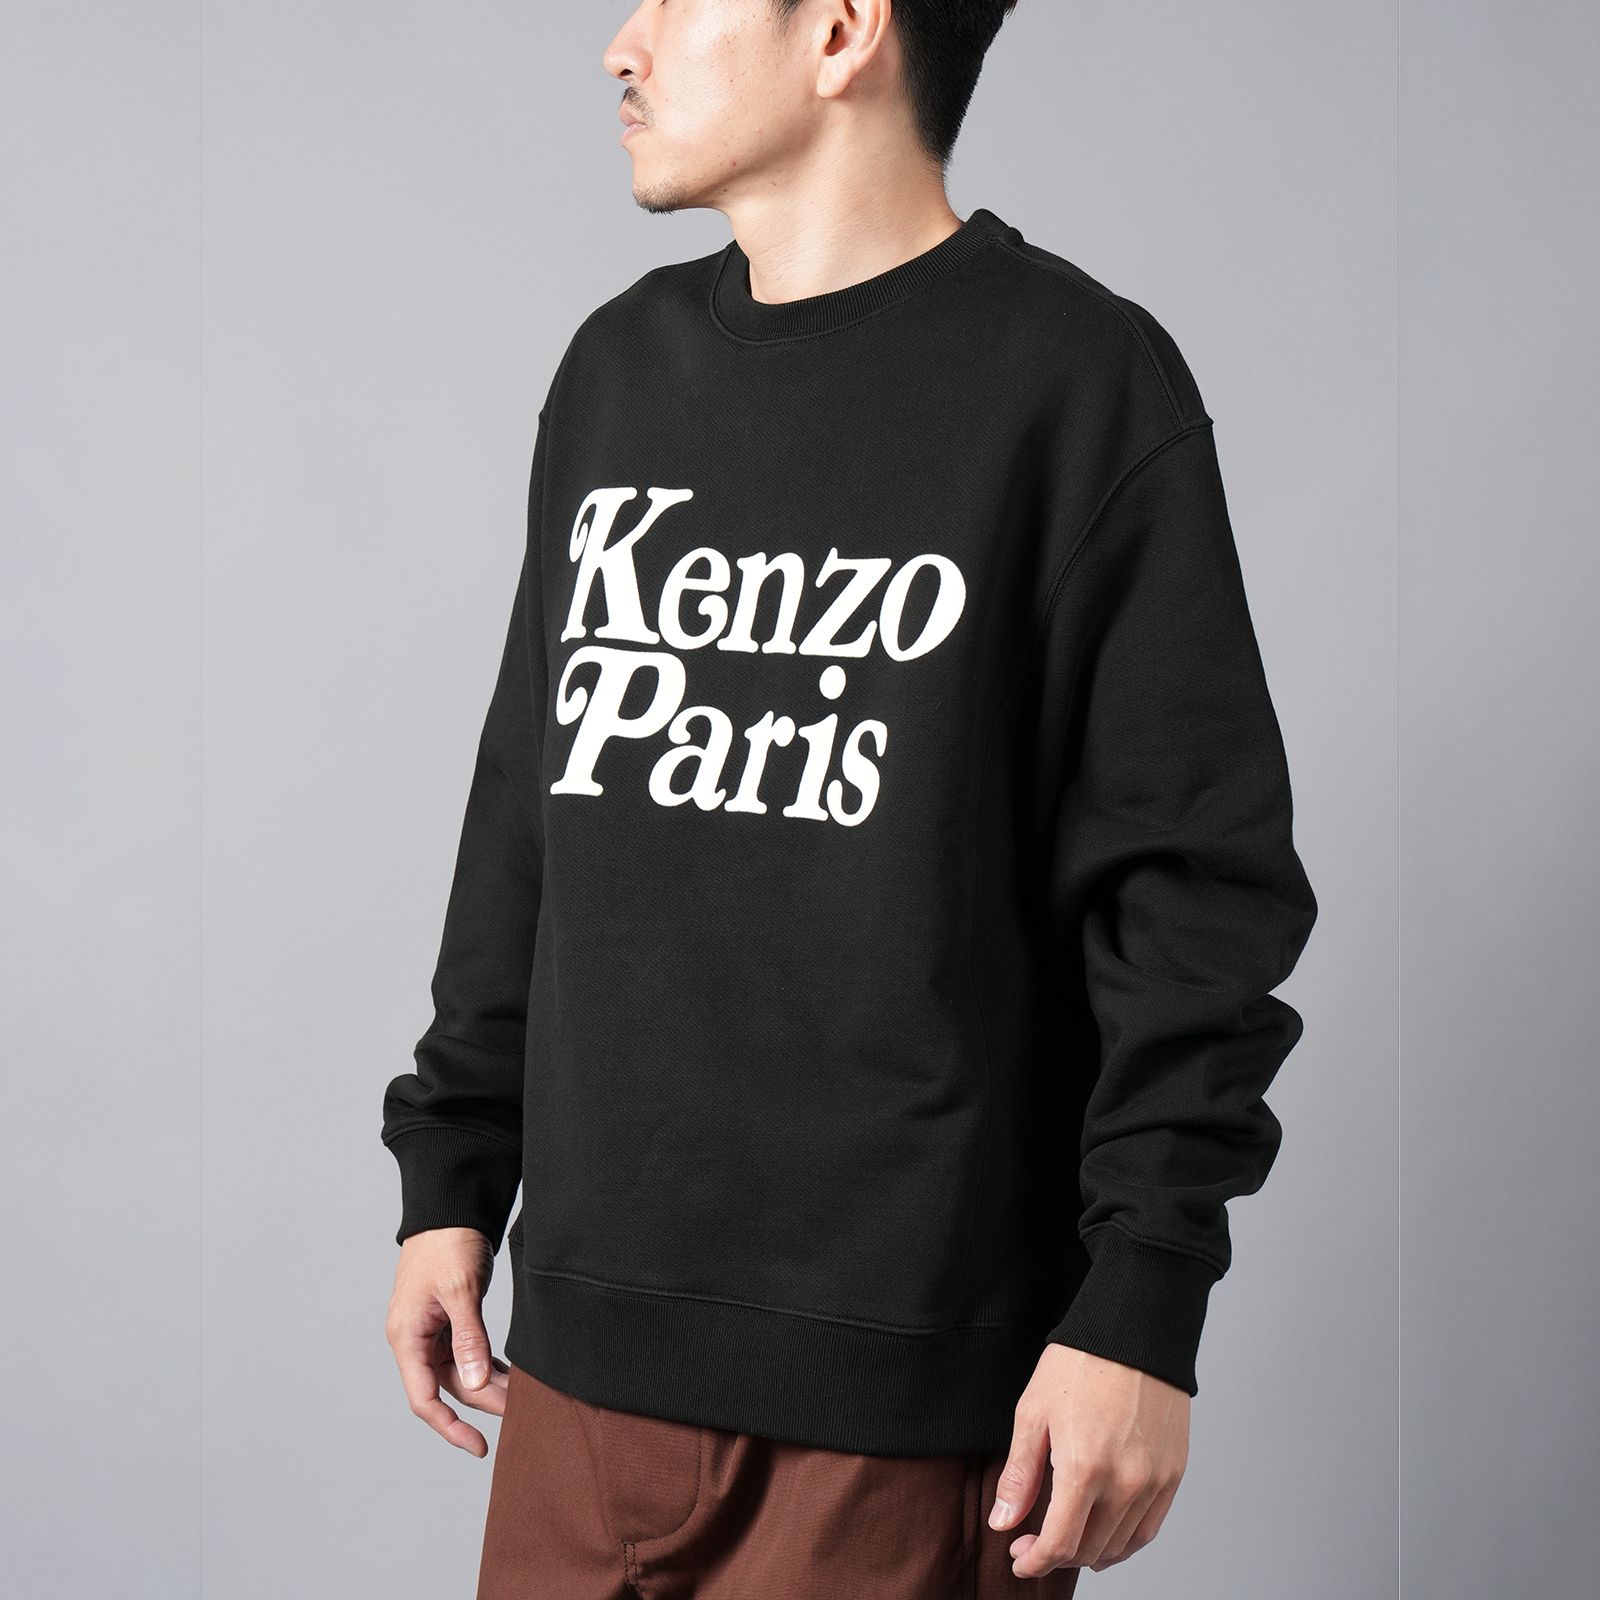 Kenzo by verdy 23aw logo sweat shirt女子ウケ抜群のお品です